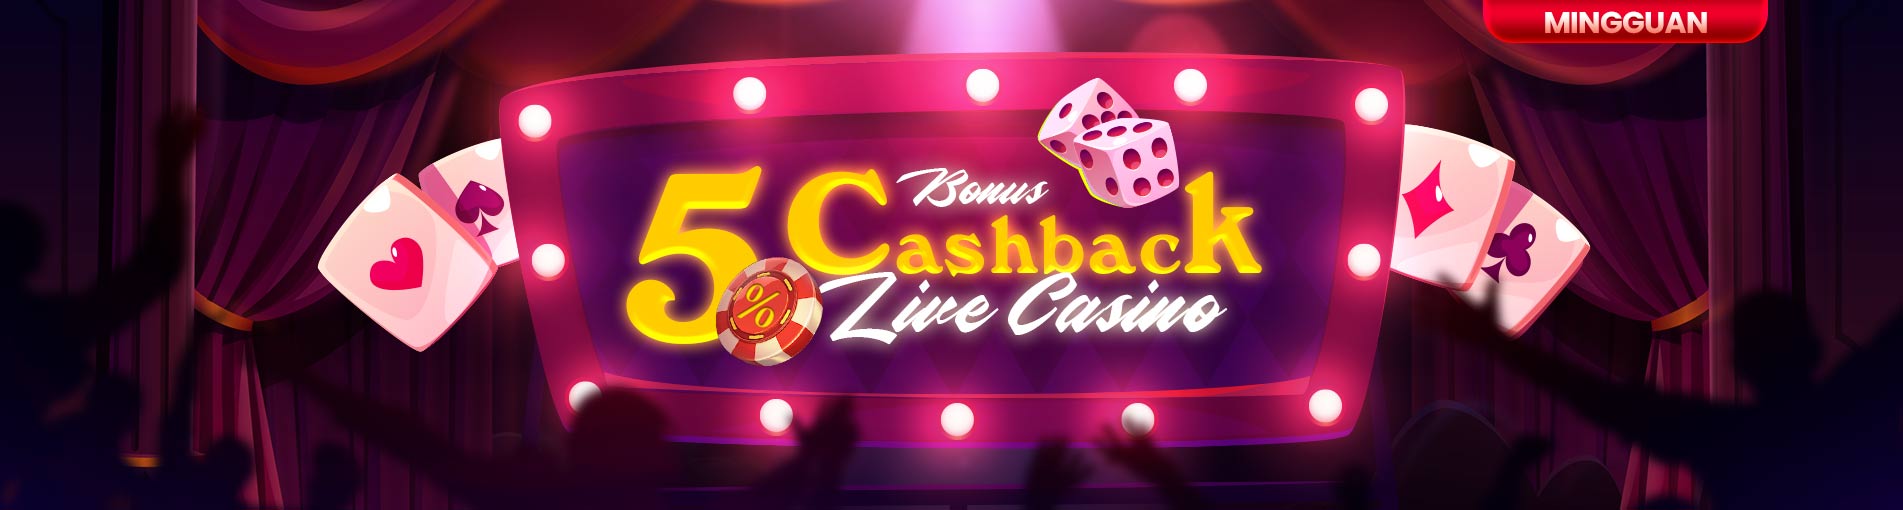 Bonus Cashback Hingga 5% LIVE CASINO